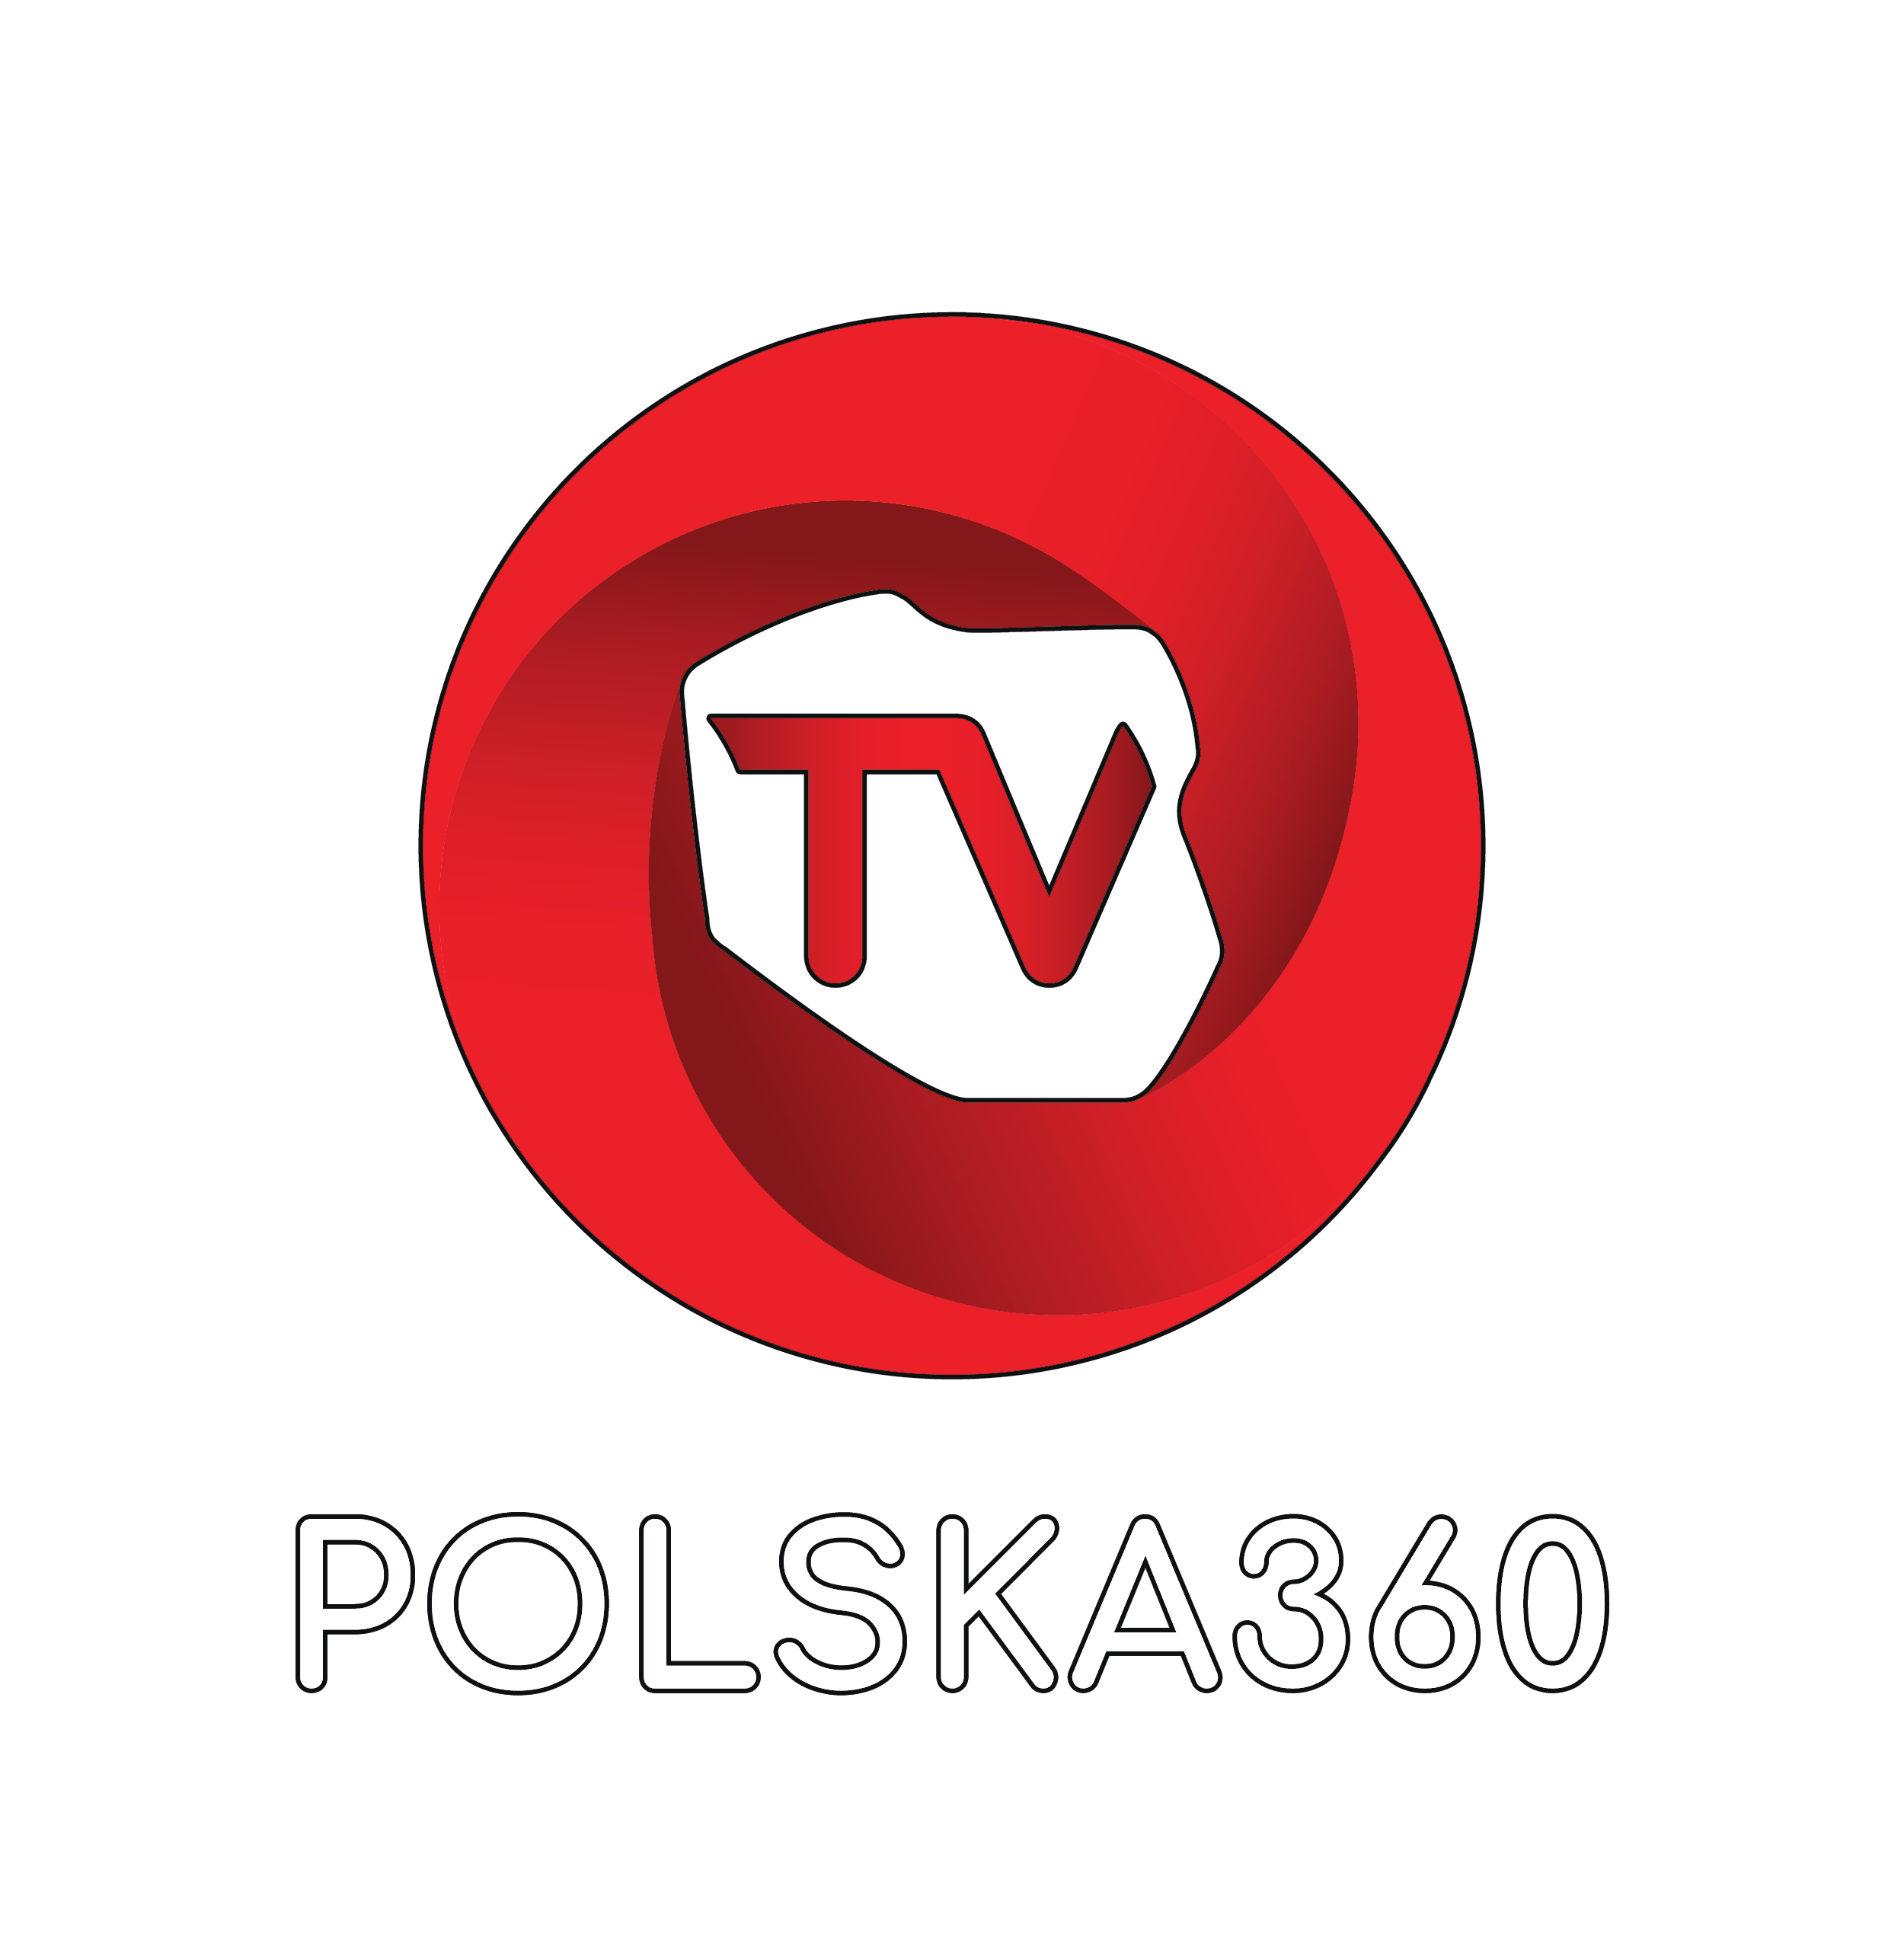 Polska360